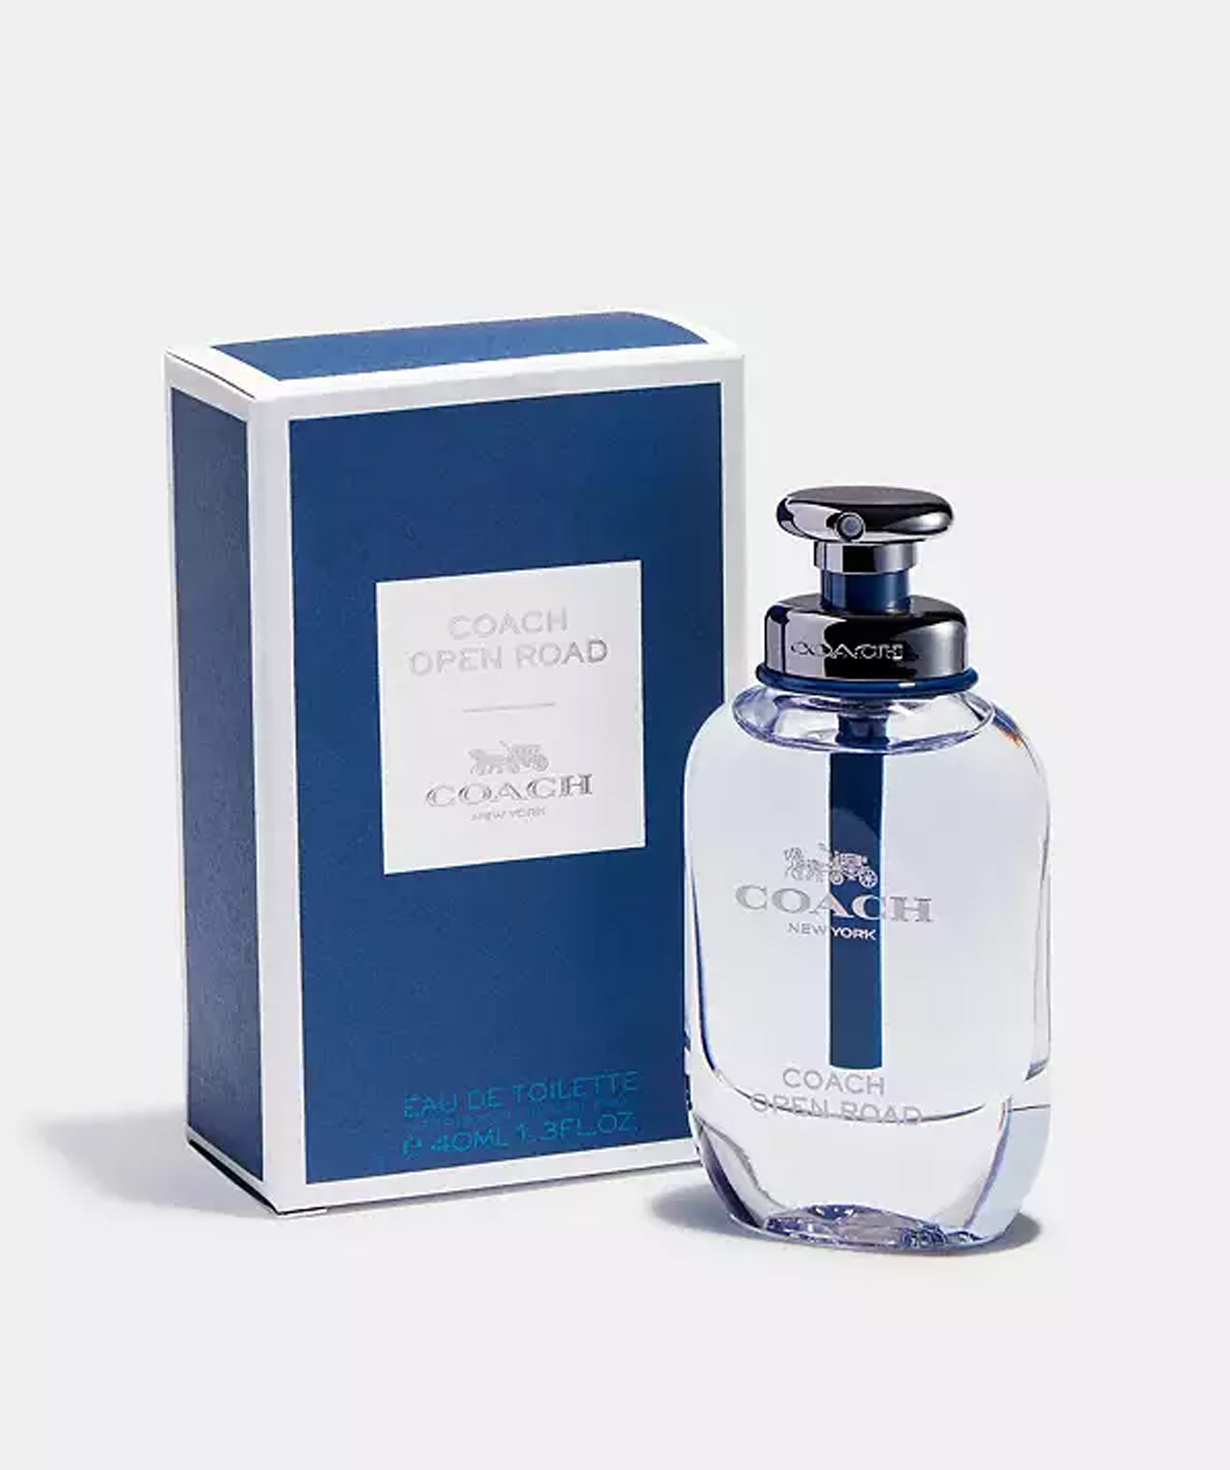 Perfume «Coach» Open Road, for men, 40 ml